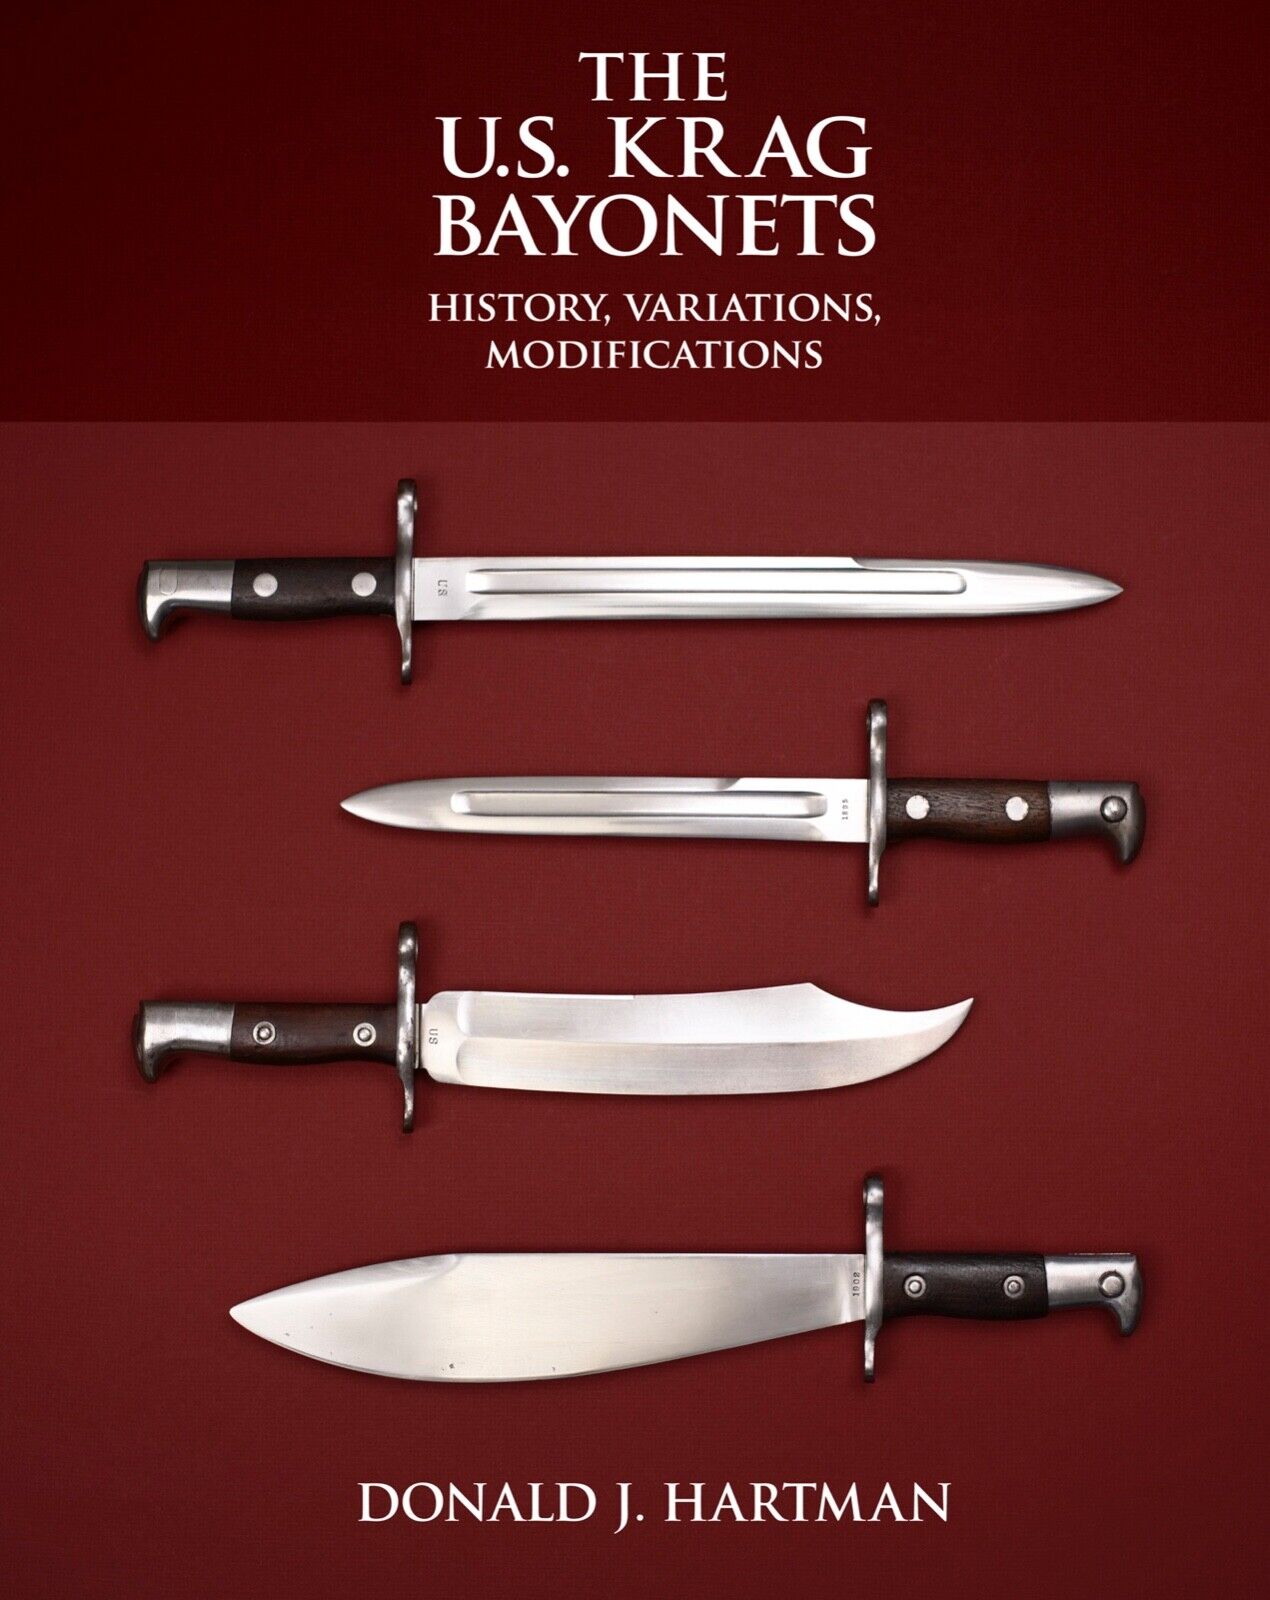 The US Krag Bayonets: History, Variations, Modifications. By Donald J. Hartman